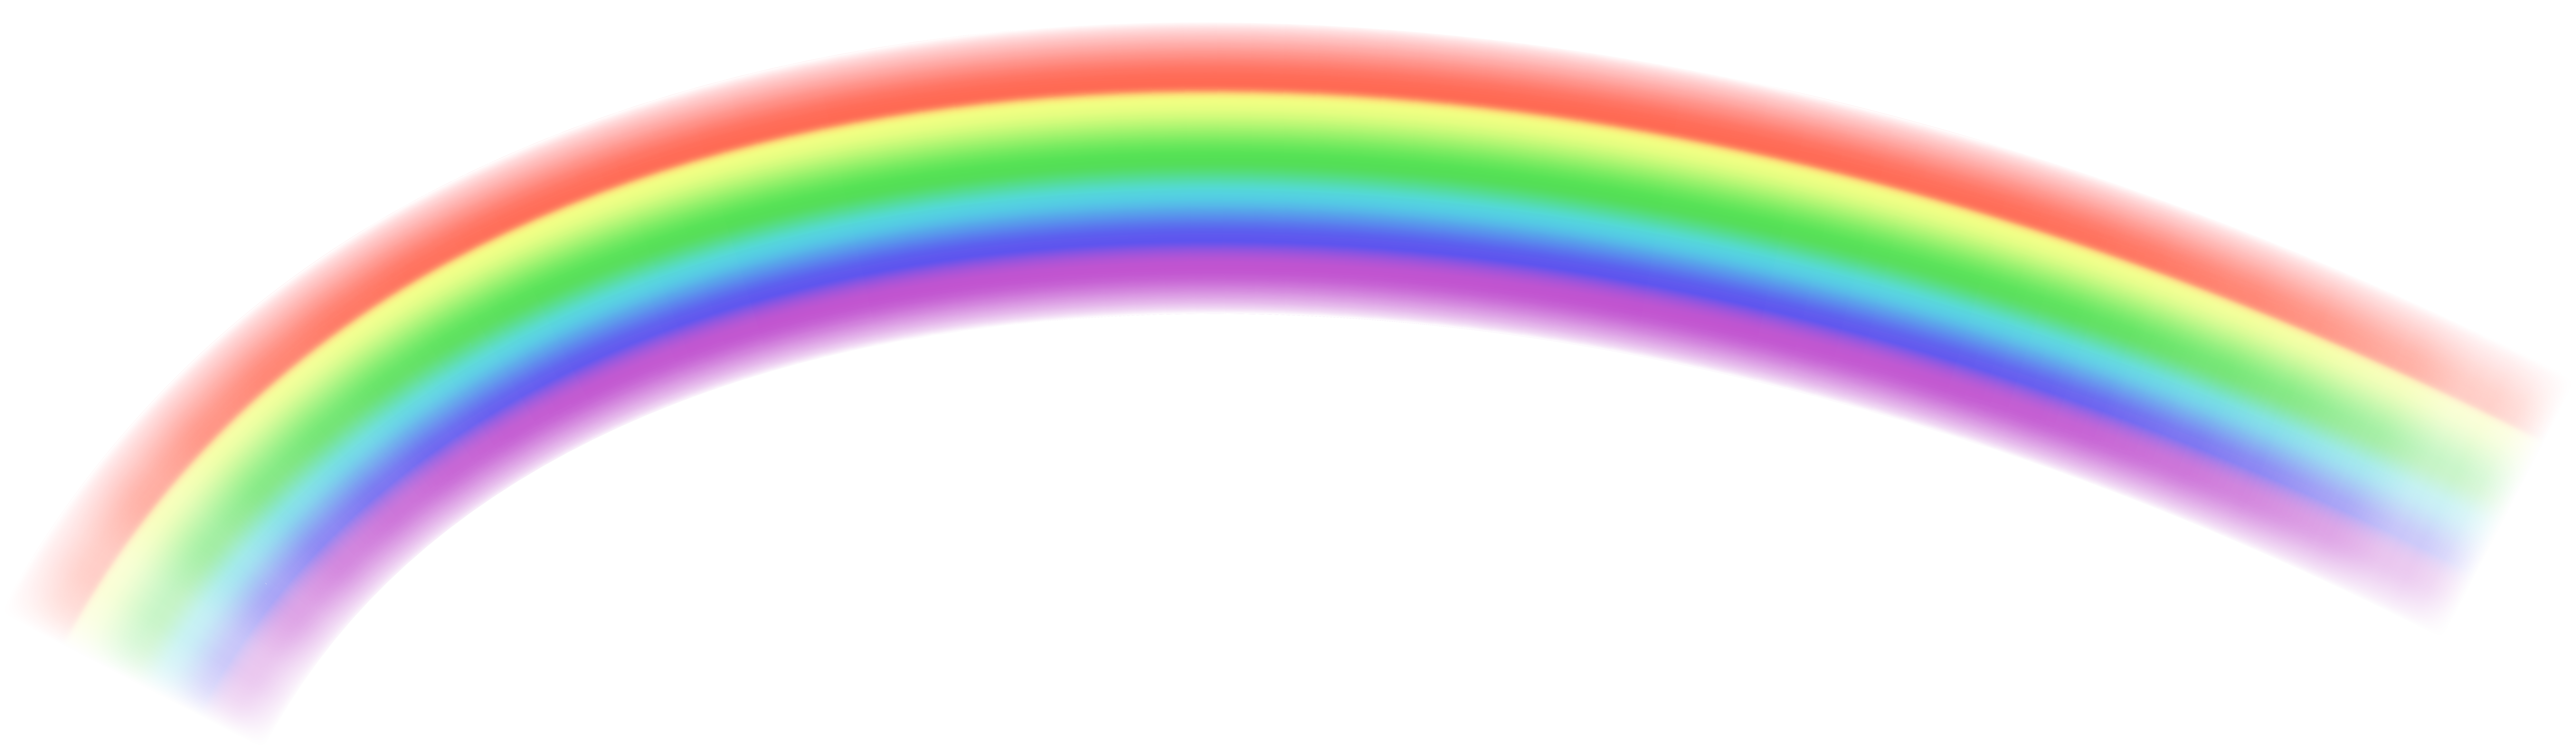 rainbow clipart transparent - photo #29